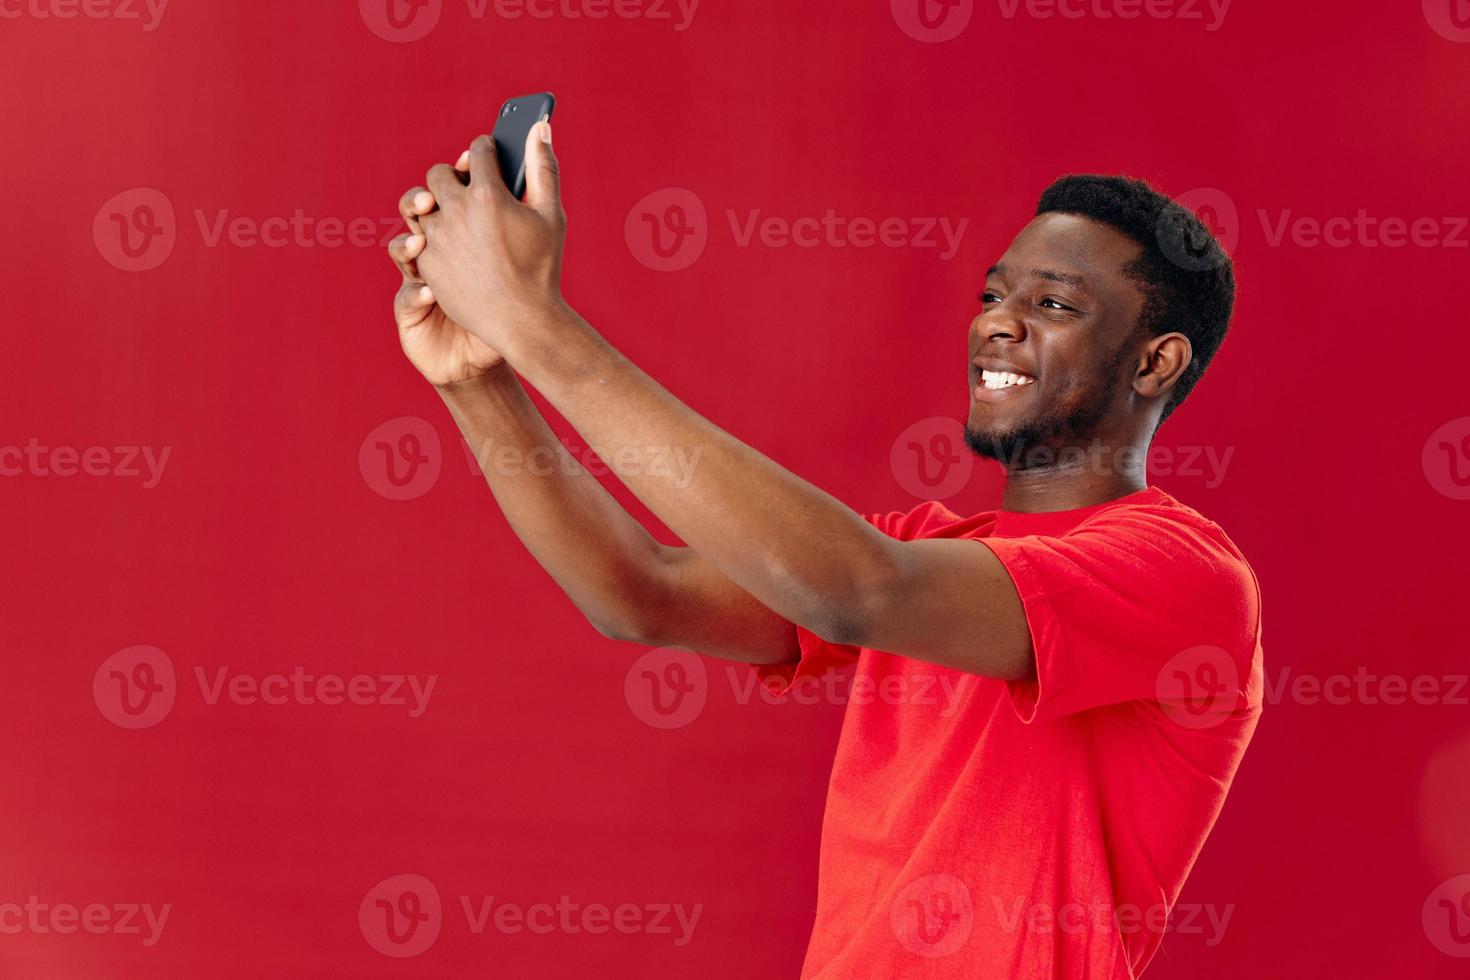 alegre hombre de africano apariencia participación teléfono encima su cabeza comunicación aislado antecedentes foto